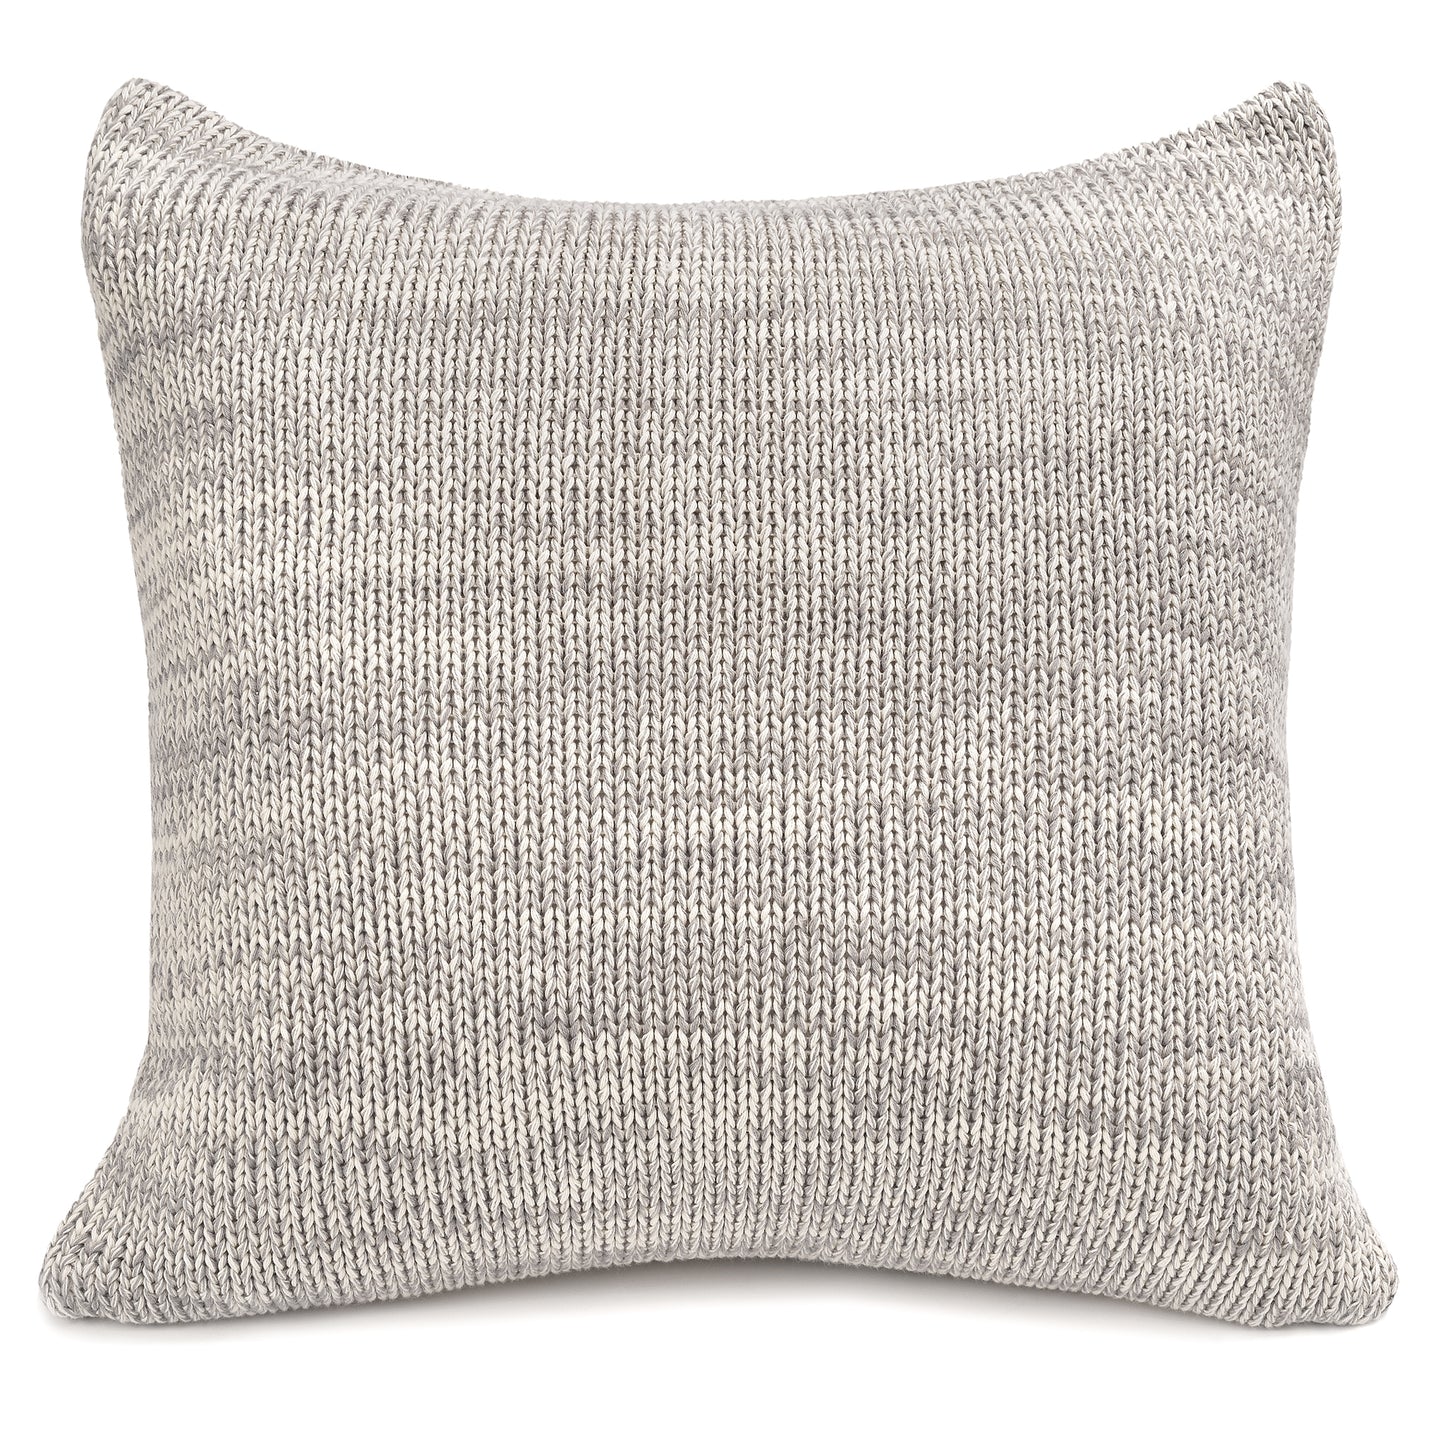 Sierra Pillow and Throw Set - Light Grey Marled